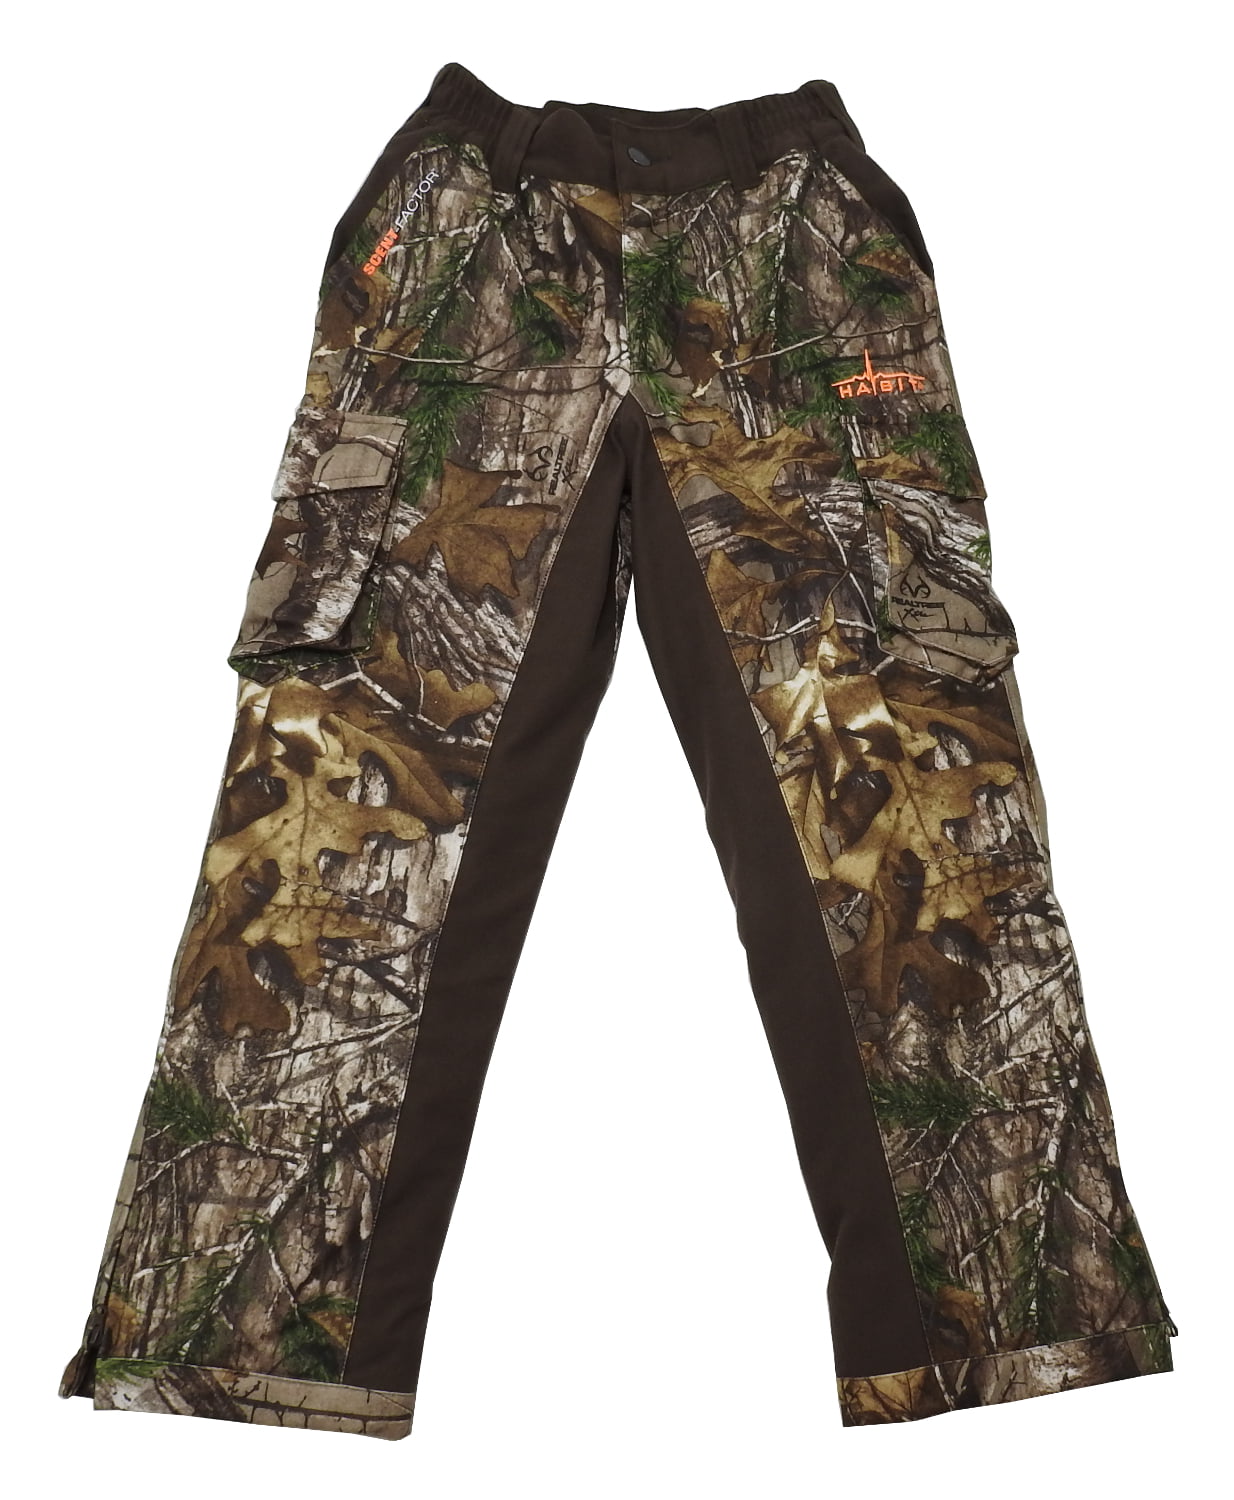 Habit Youth Size Medium Insulated Camouflage Camo Hunting Fleece Pant,  Realtree Xtra/Bracken